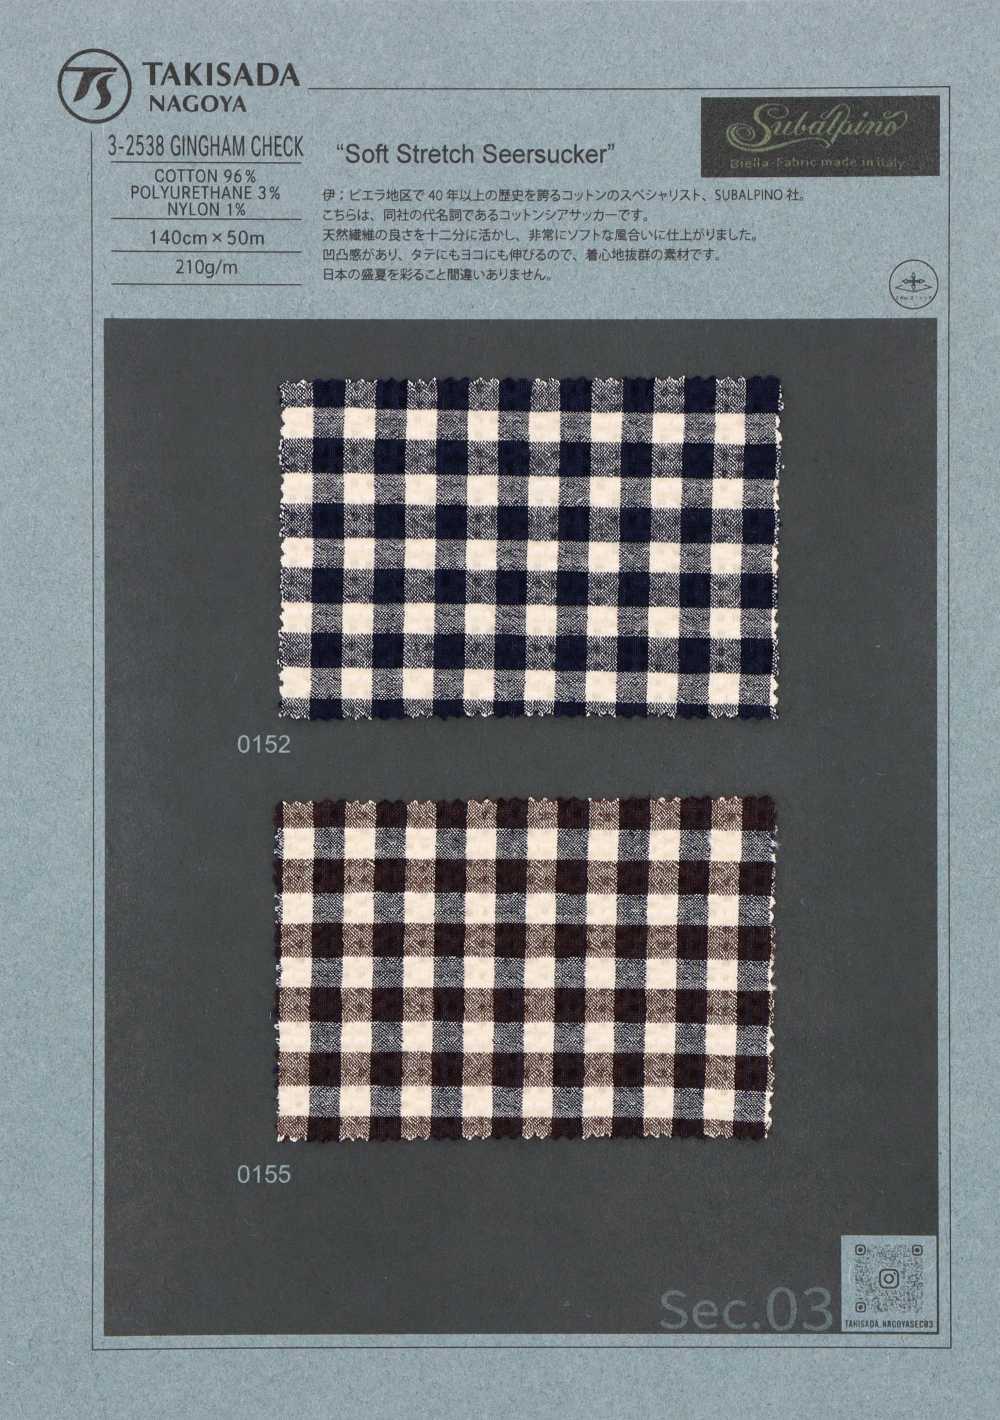 3-2538GINGHAM CHECK SUBALPINO Shear Seersucker Cuadros Vichy[Fabrica Textil] Takisada Nagoya